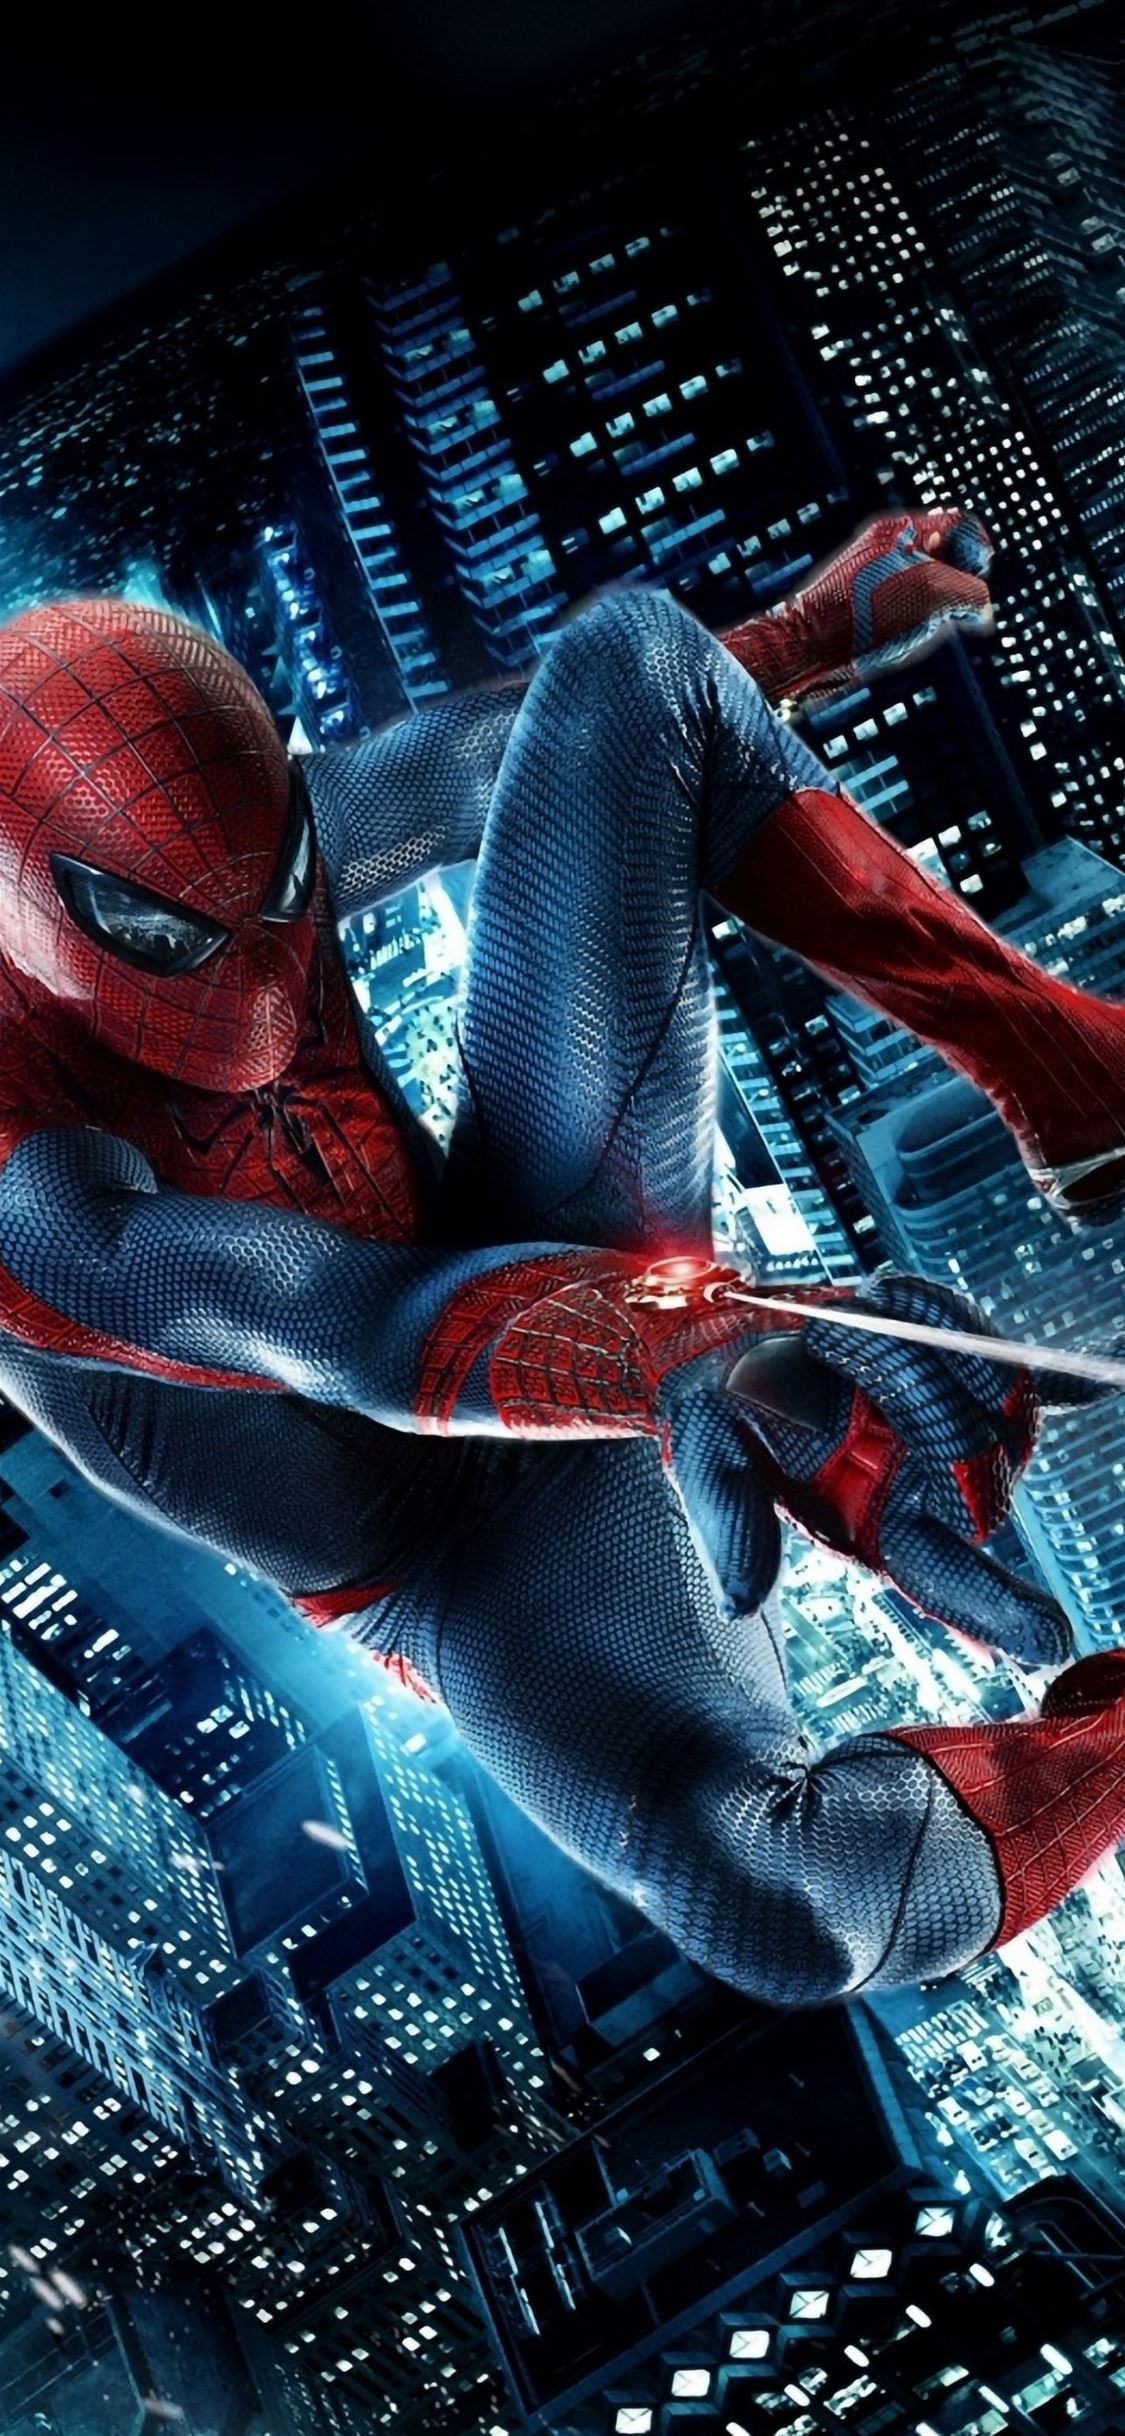 The Amazing Spiderman 2 iPhone wallpaper 